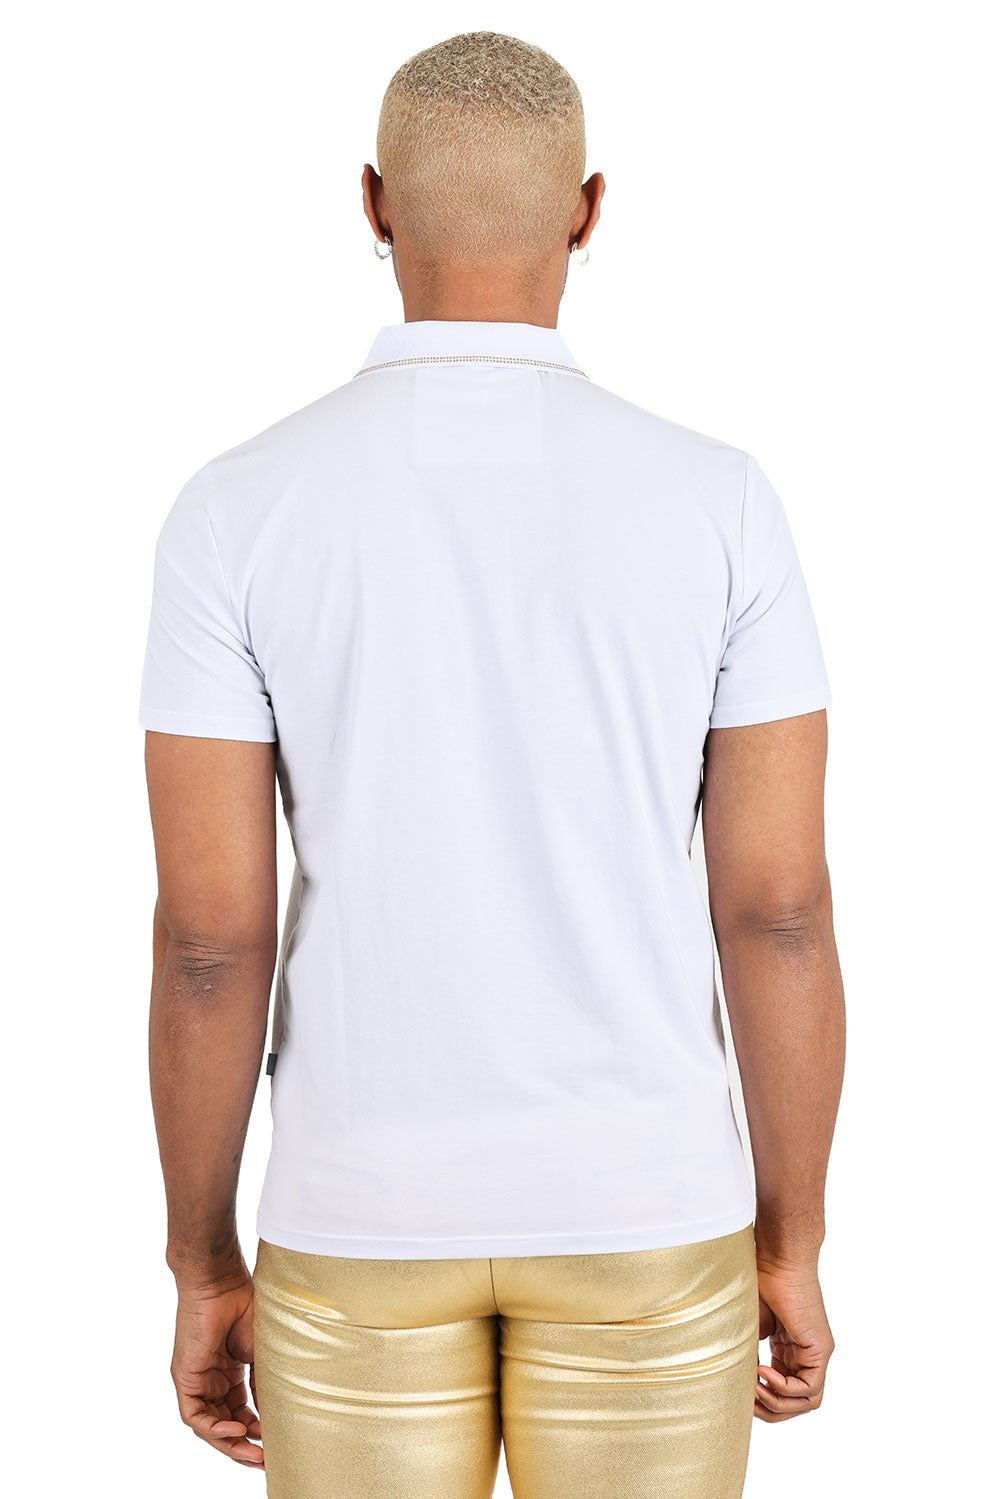 Barabas Men's Greek Key Print Design With Rhinestone Polo Shirt 2PZ01 White Gold